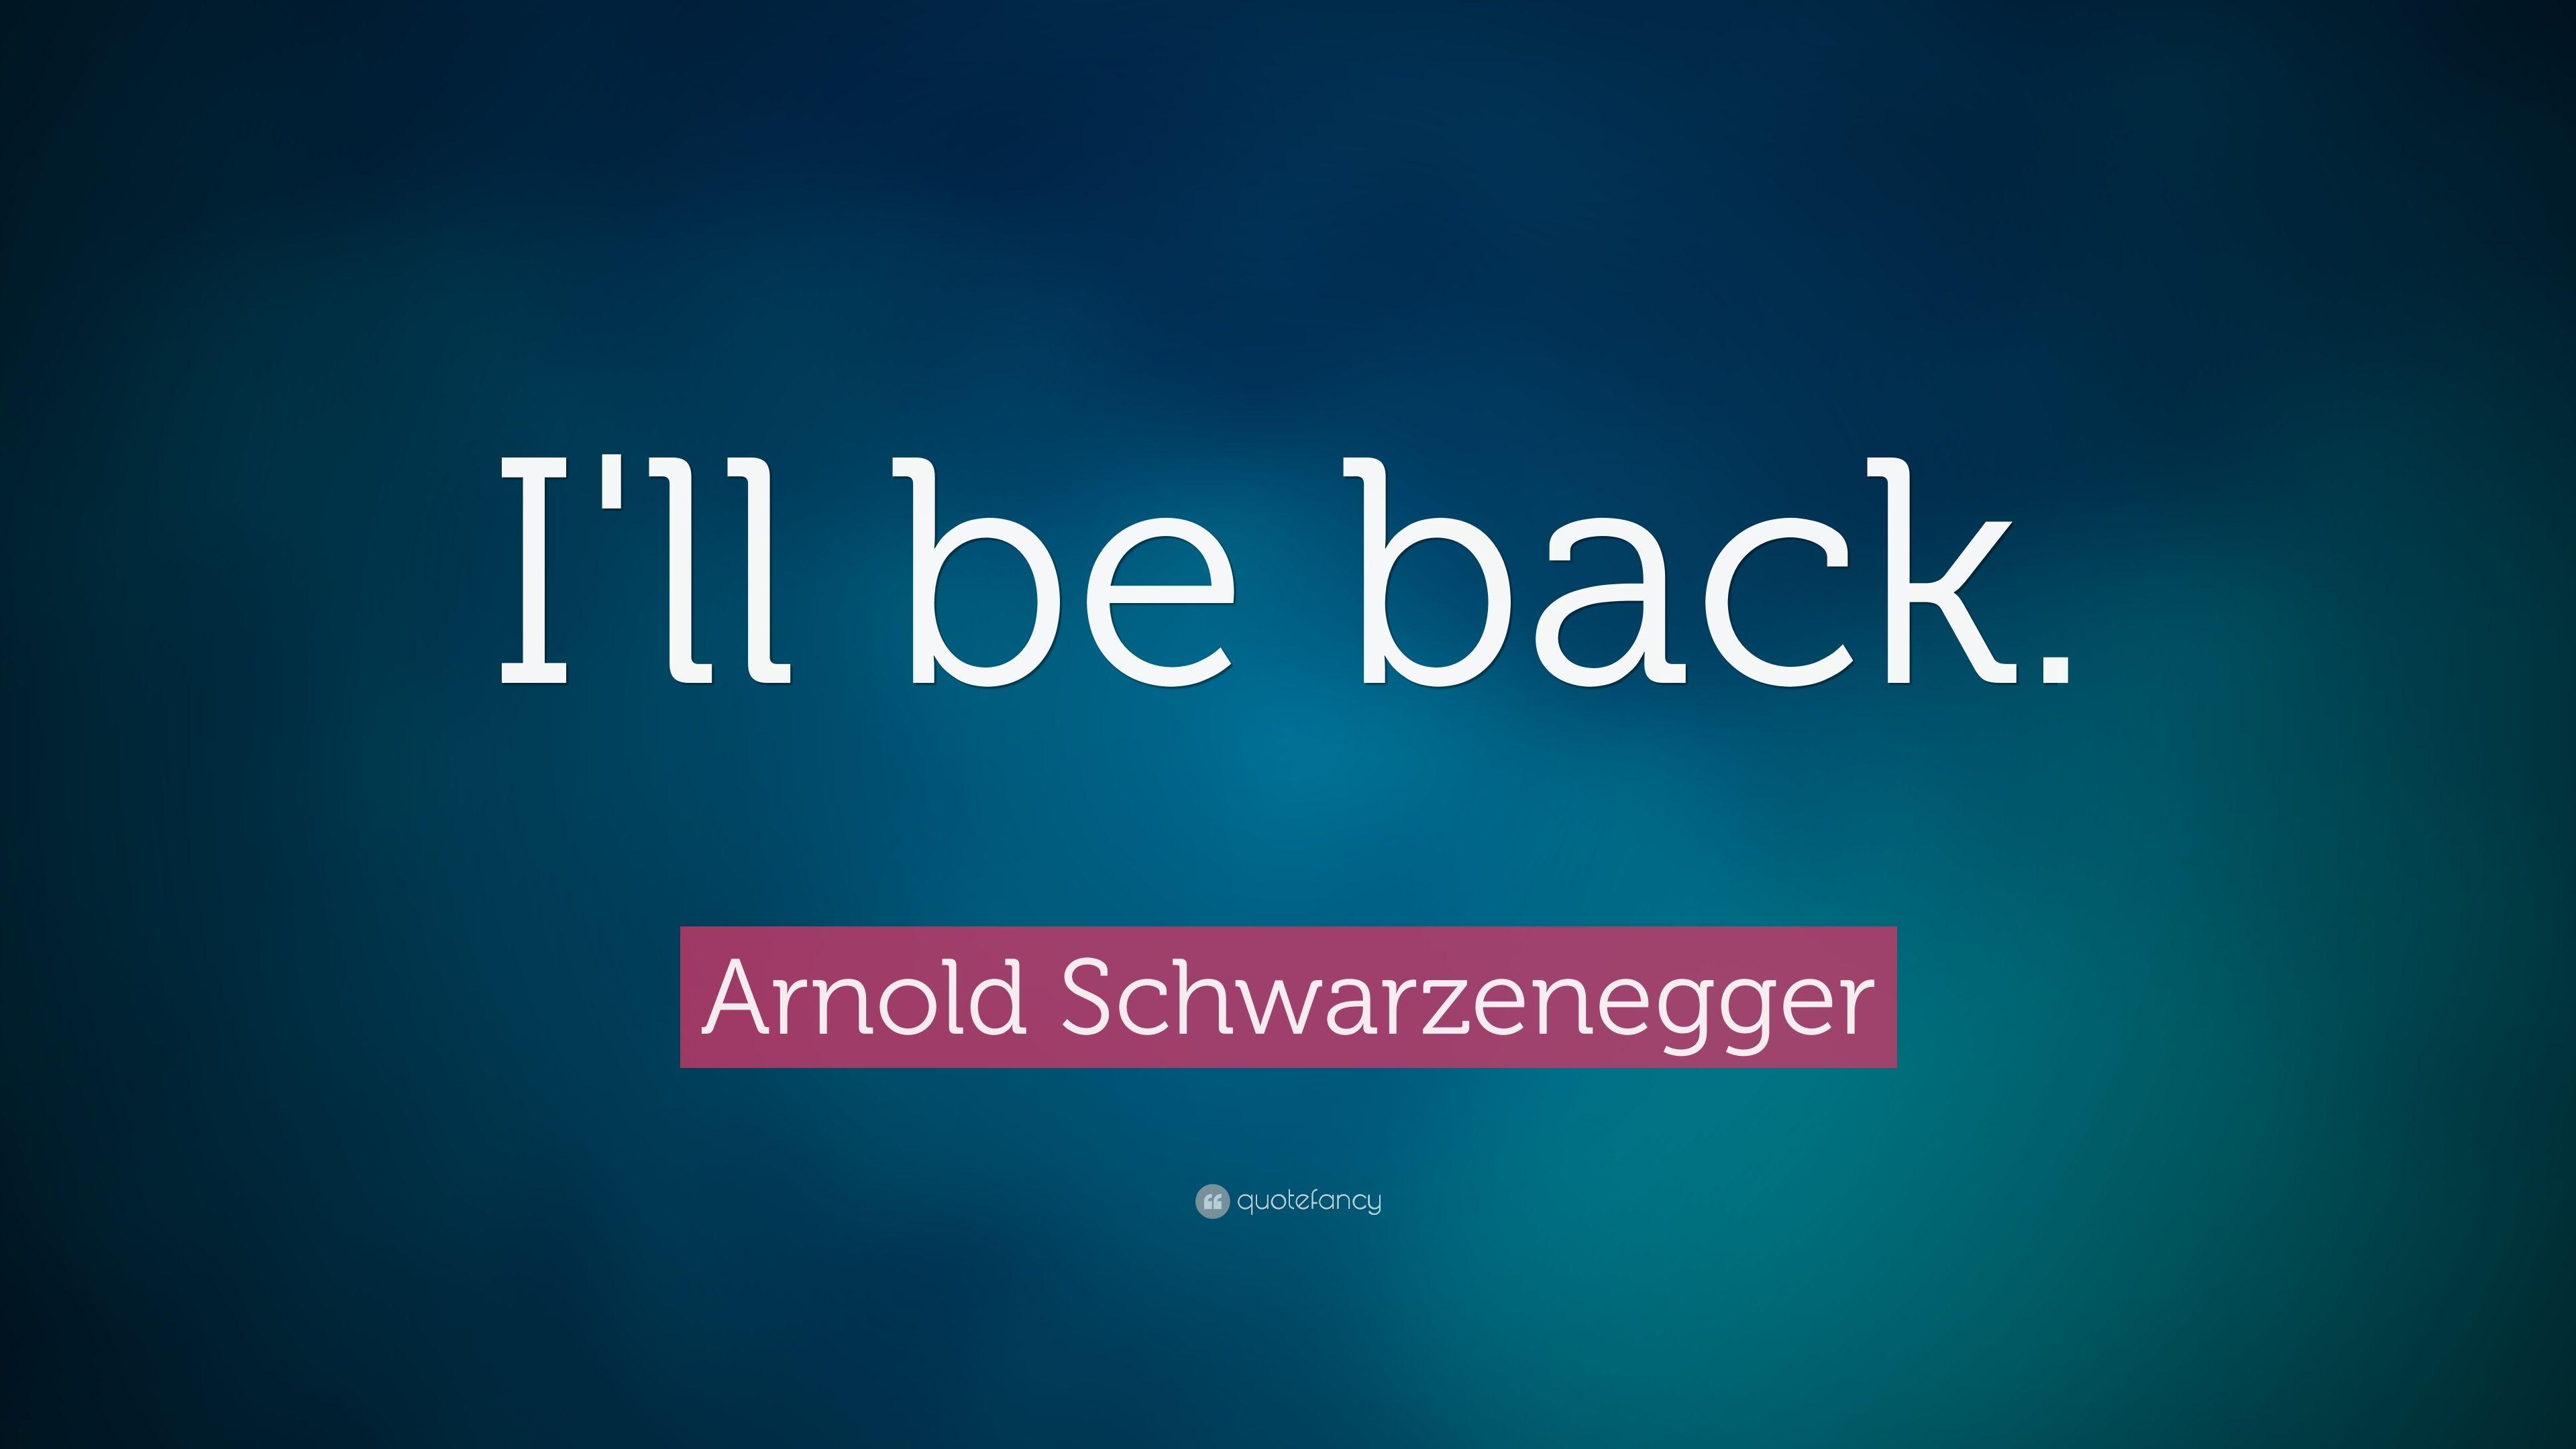 Arnold Schwarzenegger Quote: “I'll be back.” 17 wallpaper